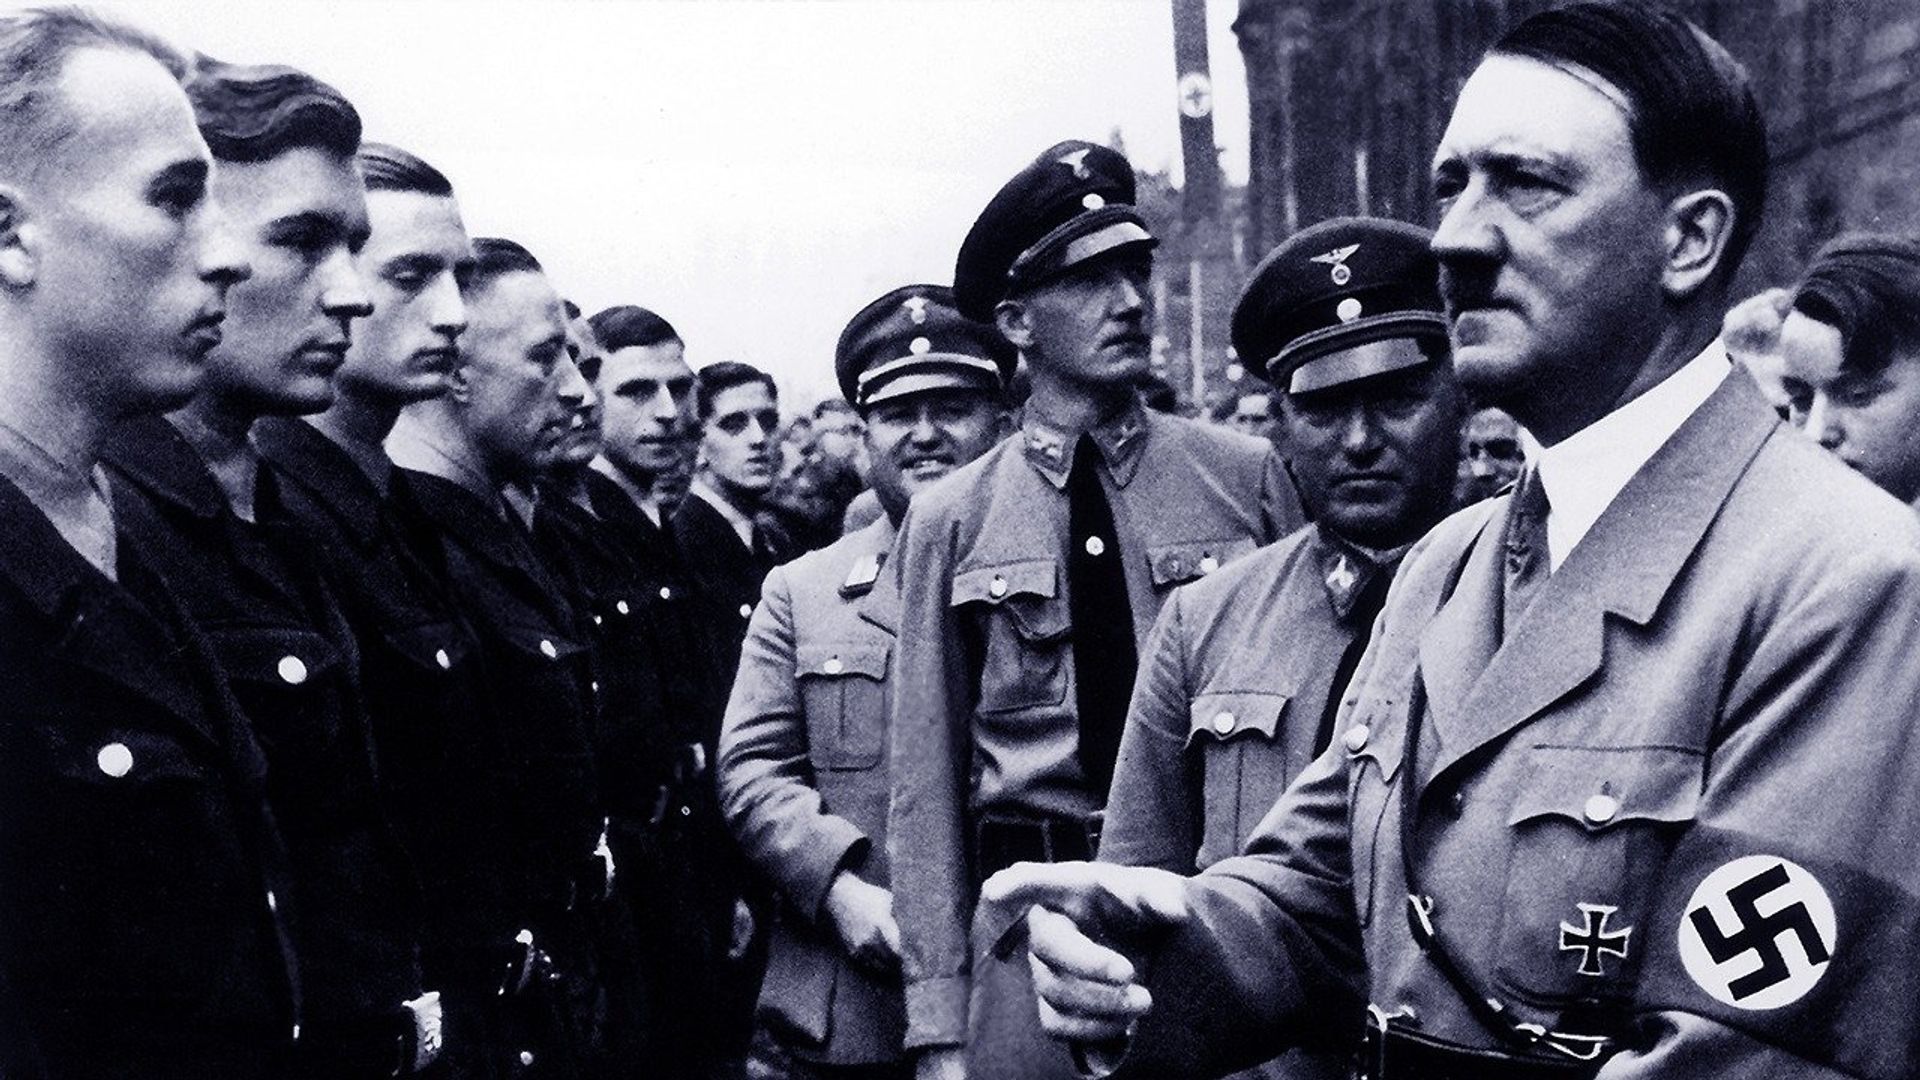 Hitler's bodyguard Backdrop